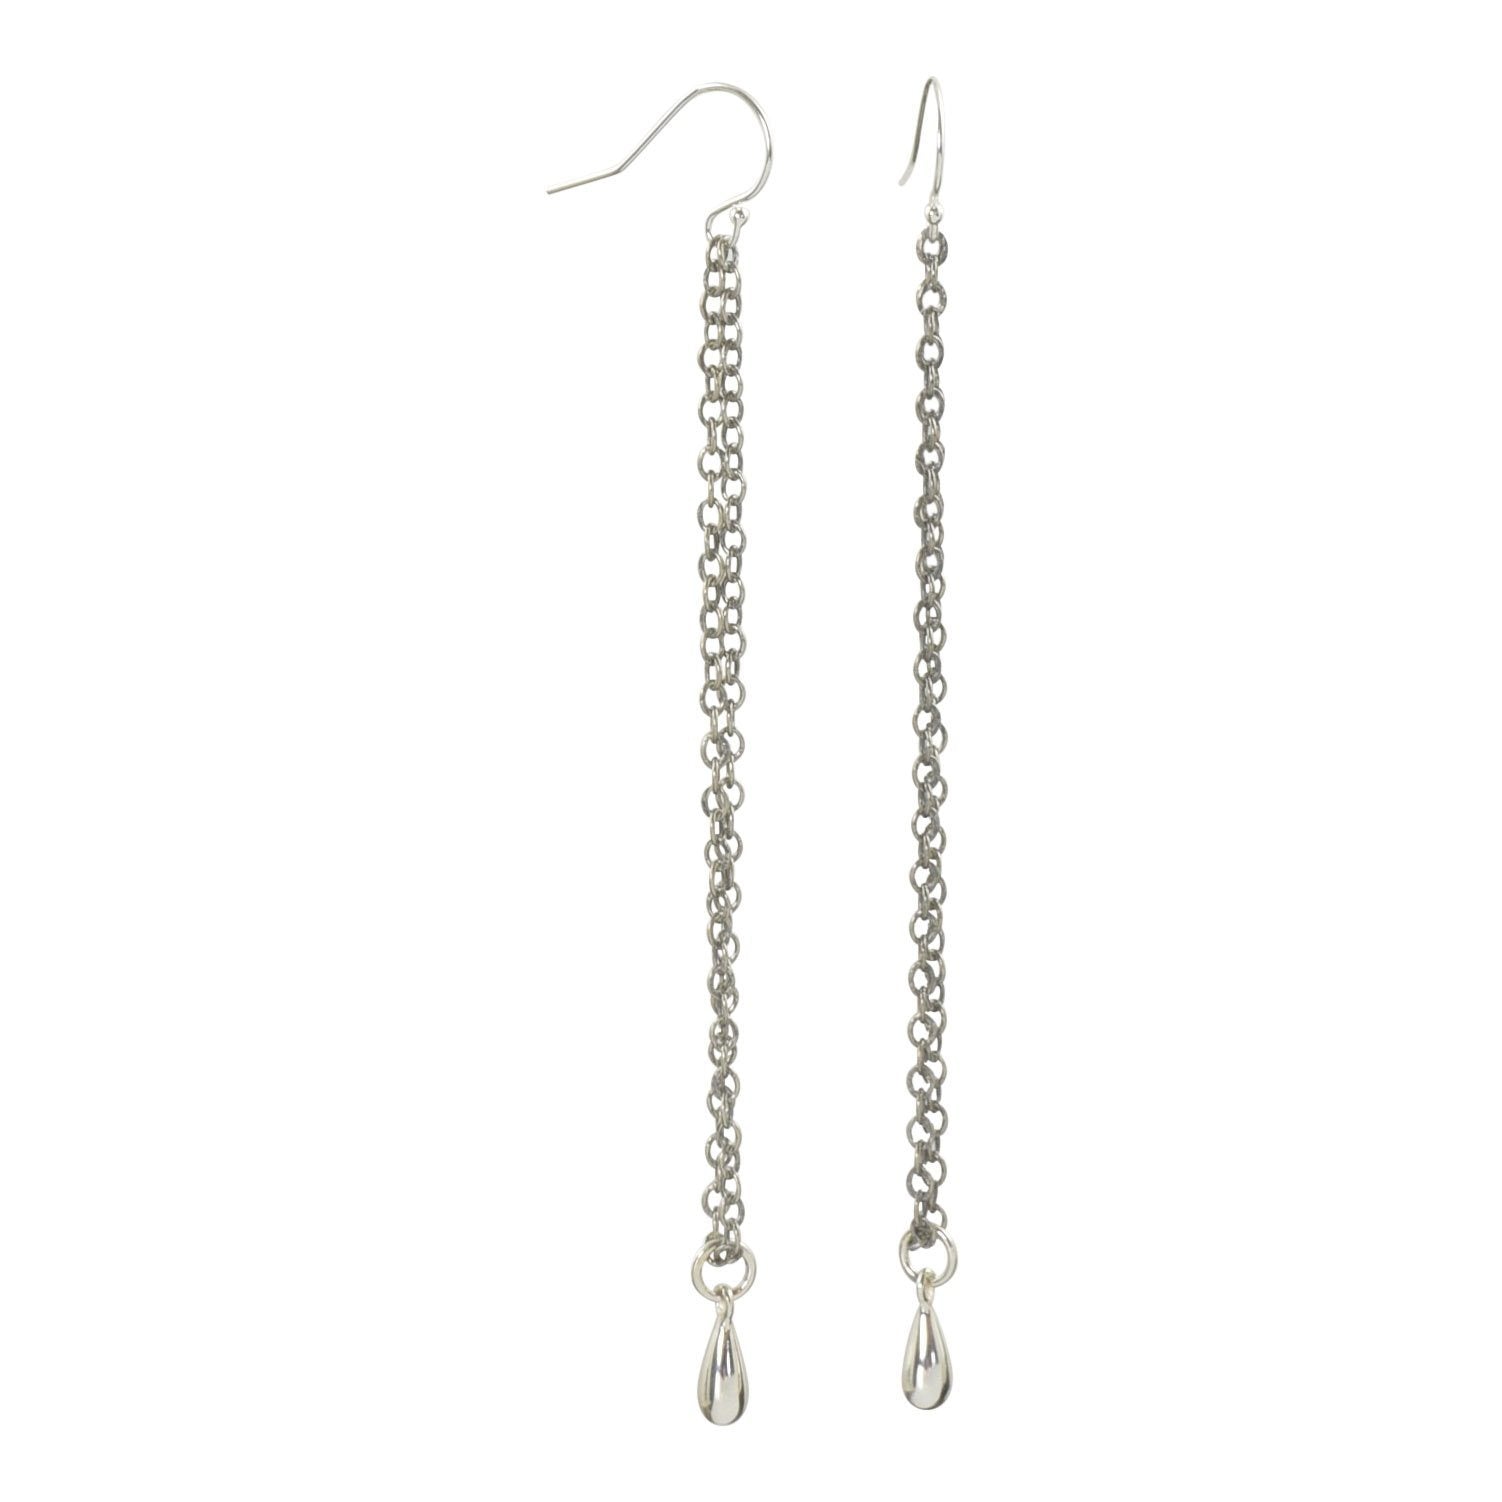 Long sterling silver teardrop earrings also available in Vermeil gold